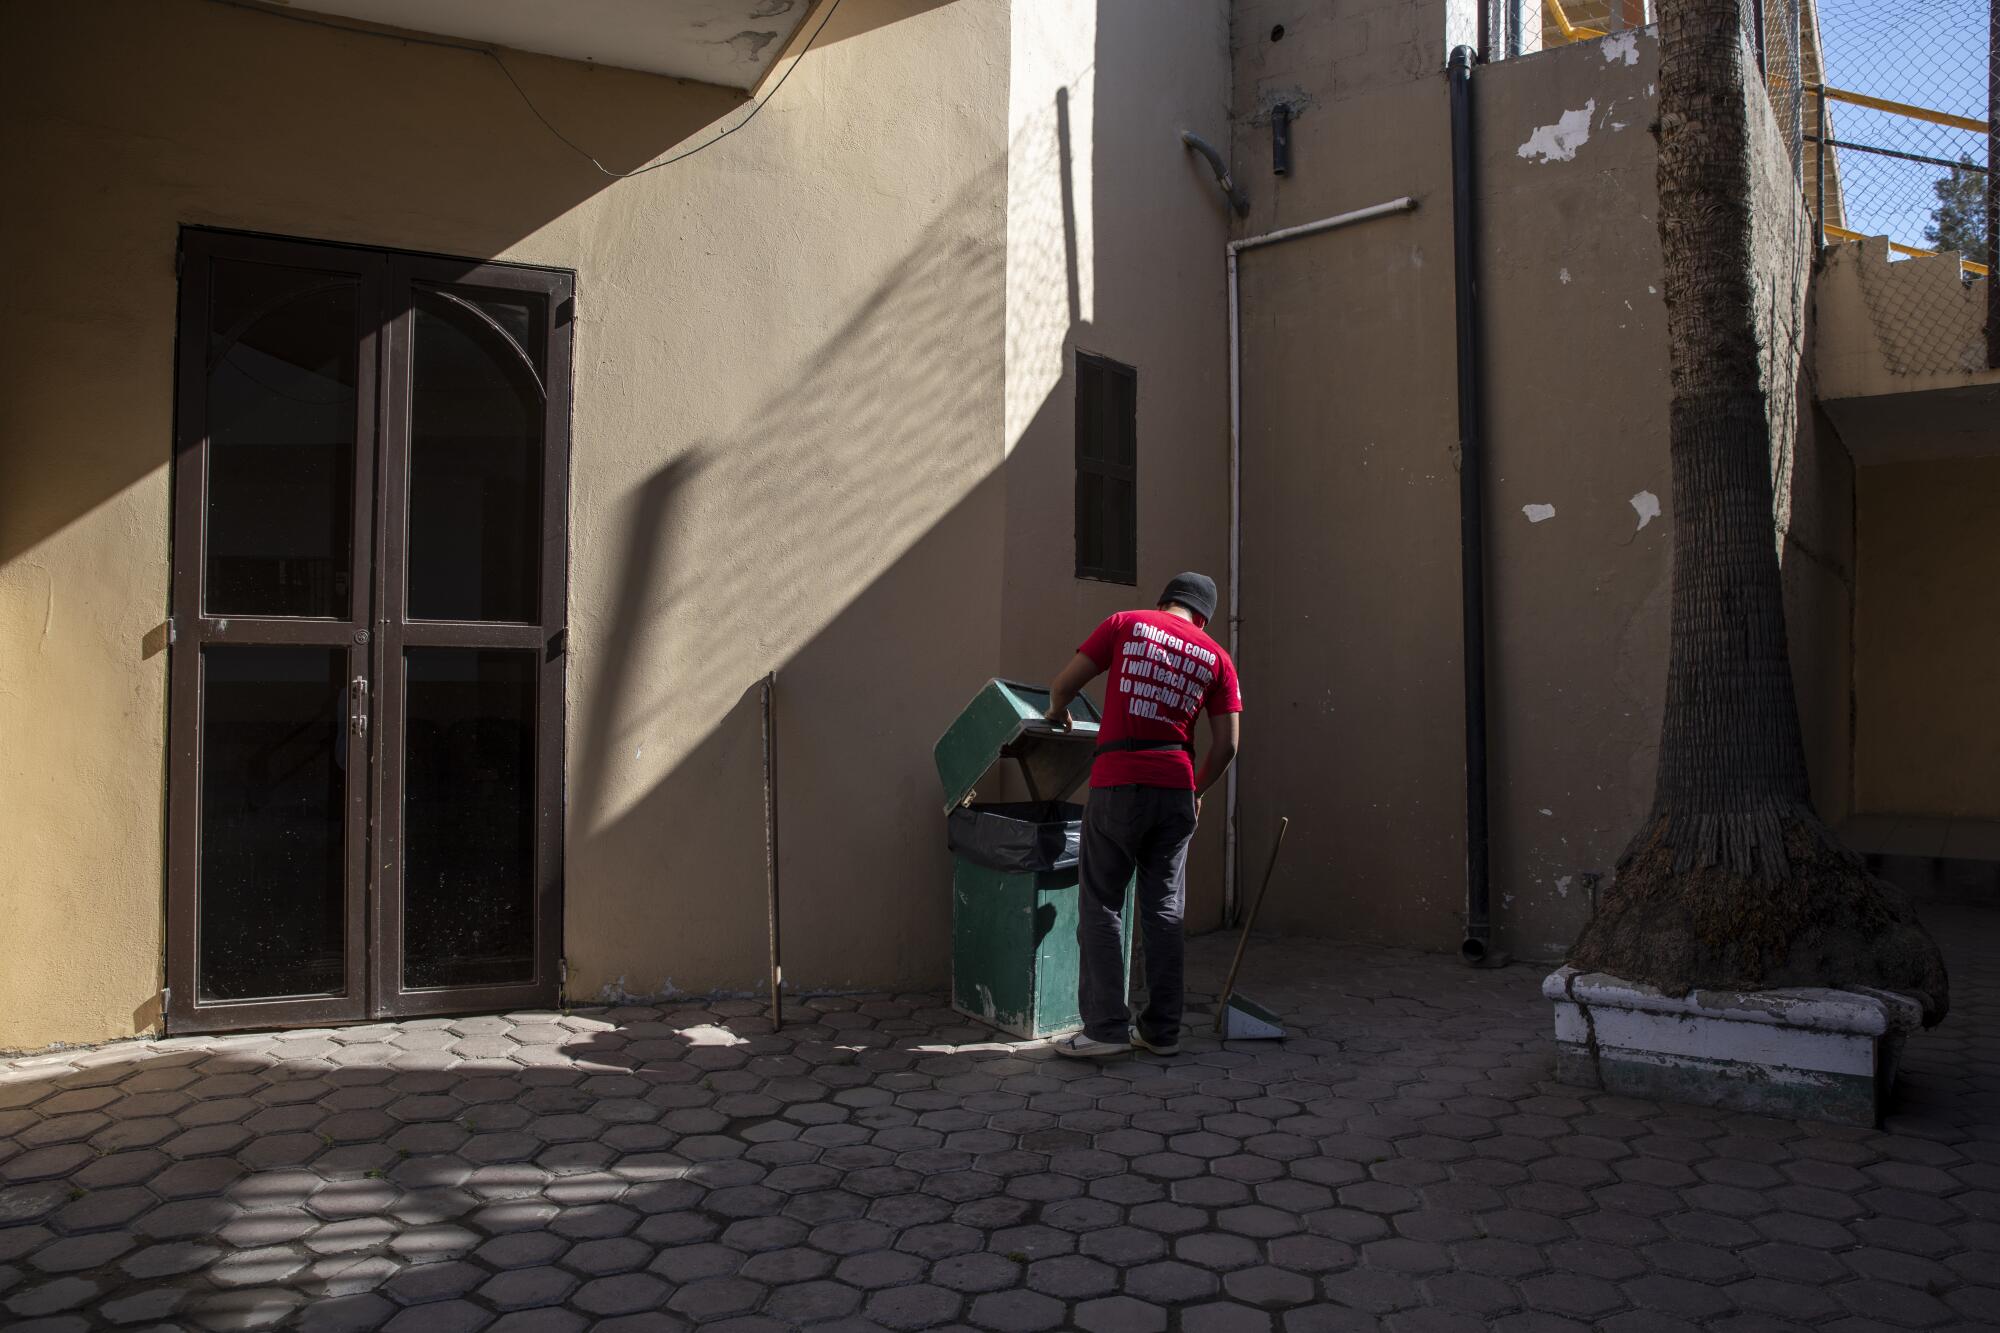 A man dumps trash into a bin outside a building